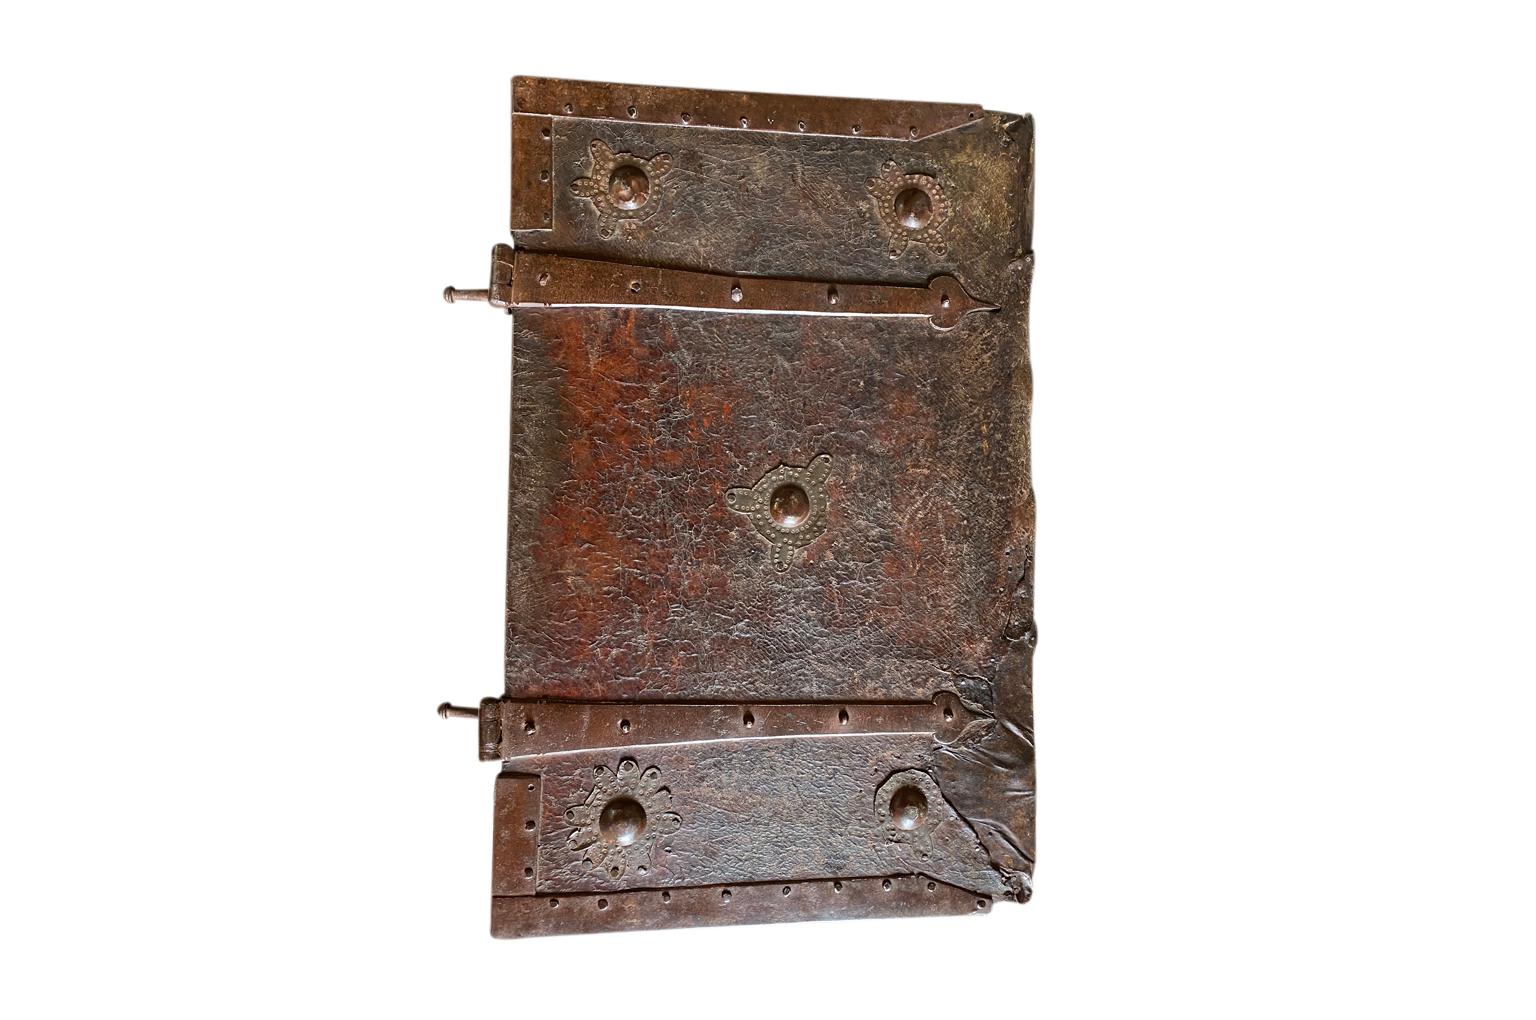 Leather Italian 17th Century Porte-Livre Précieux, Precious Book Carrier